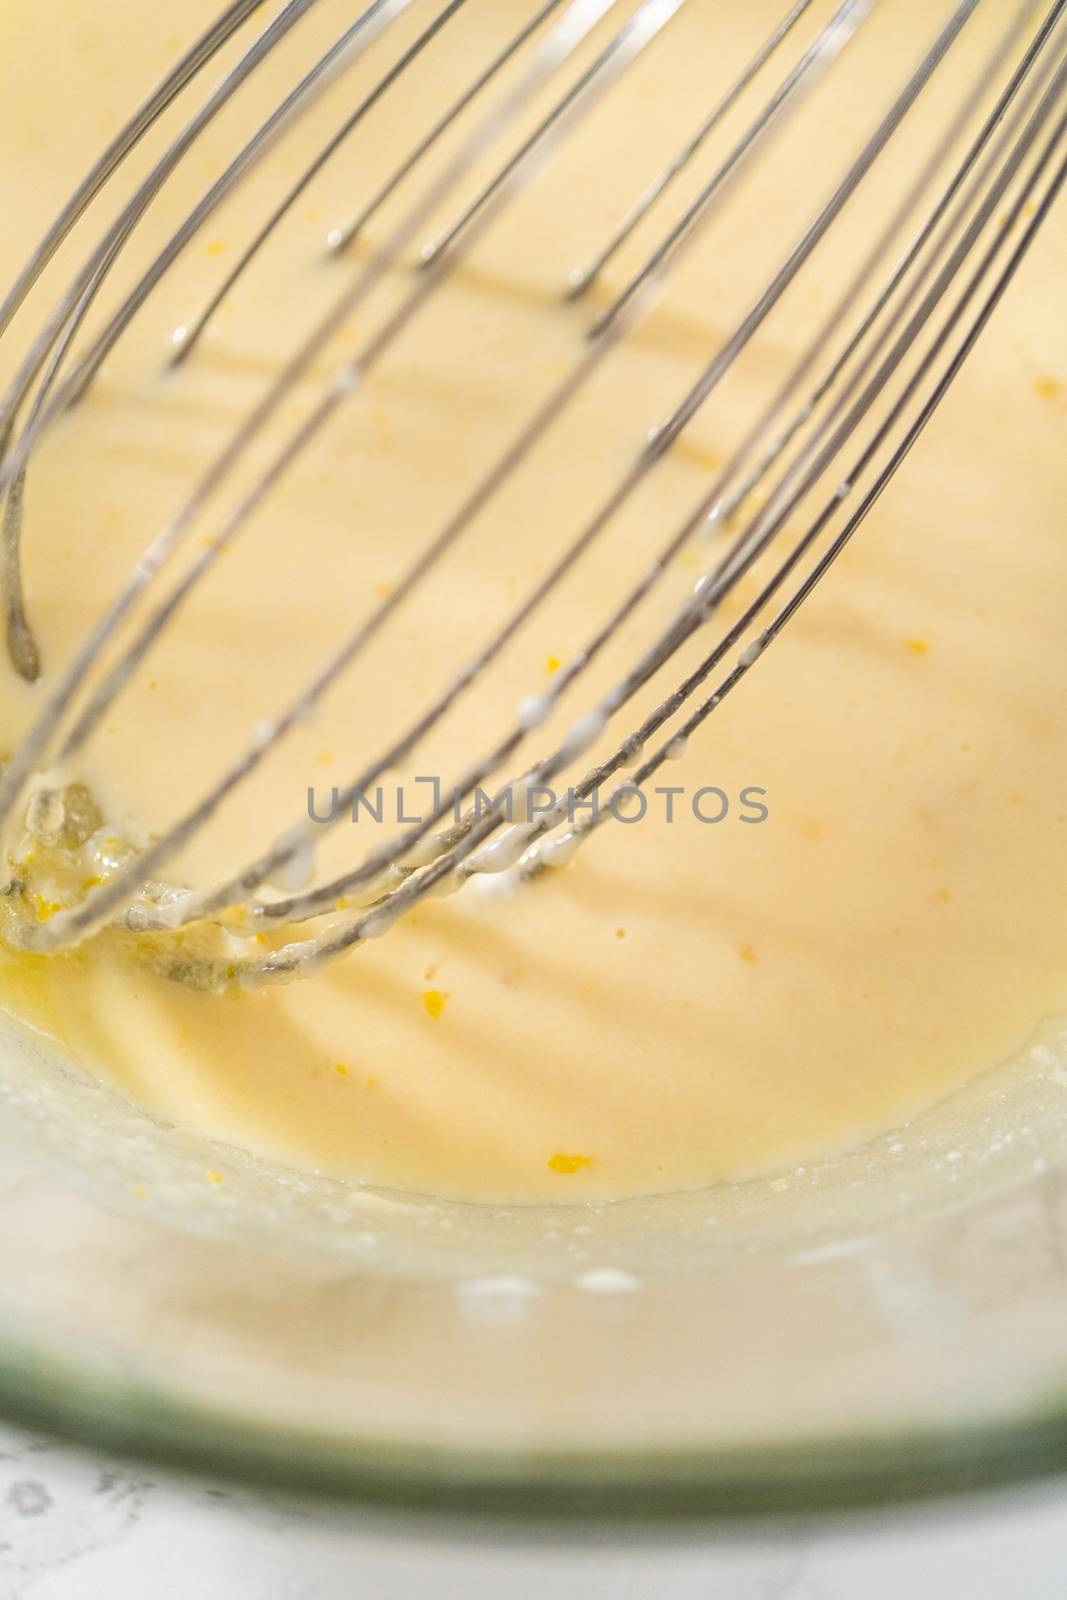 Mixing wet ingredients in a large glass mixing bowl to bake lemon cupcakes.